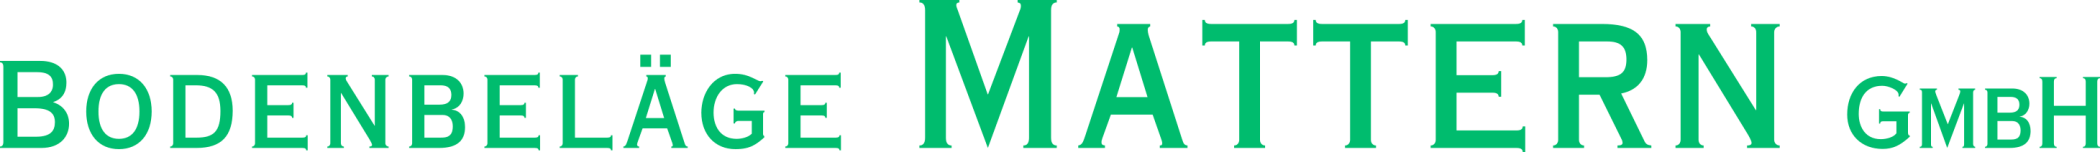 Mattern-Logo